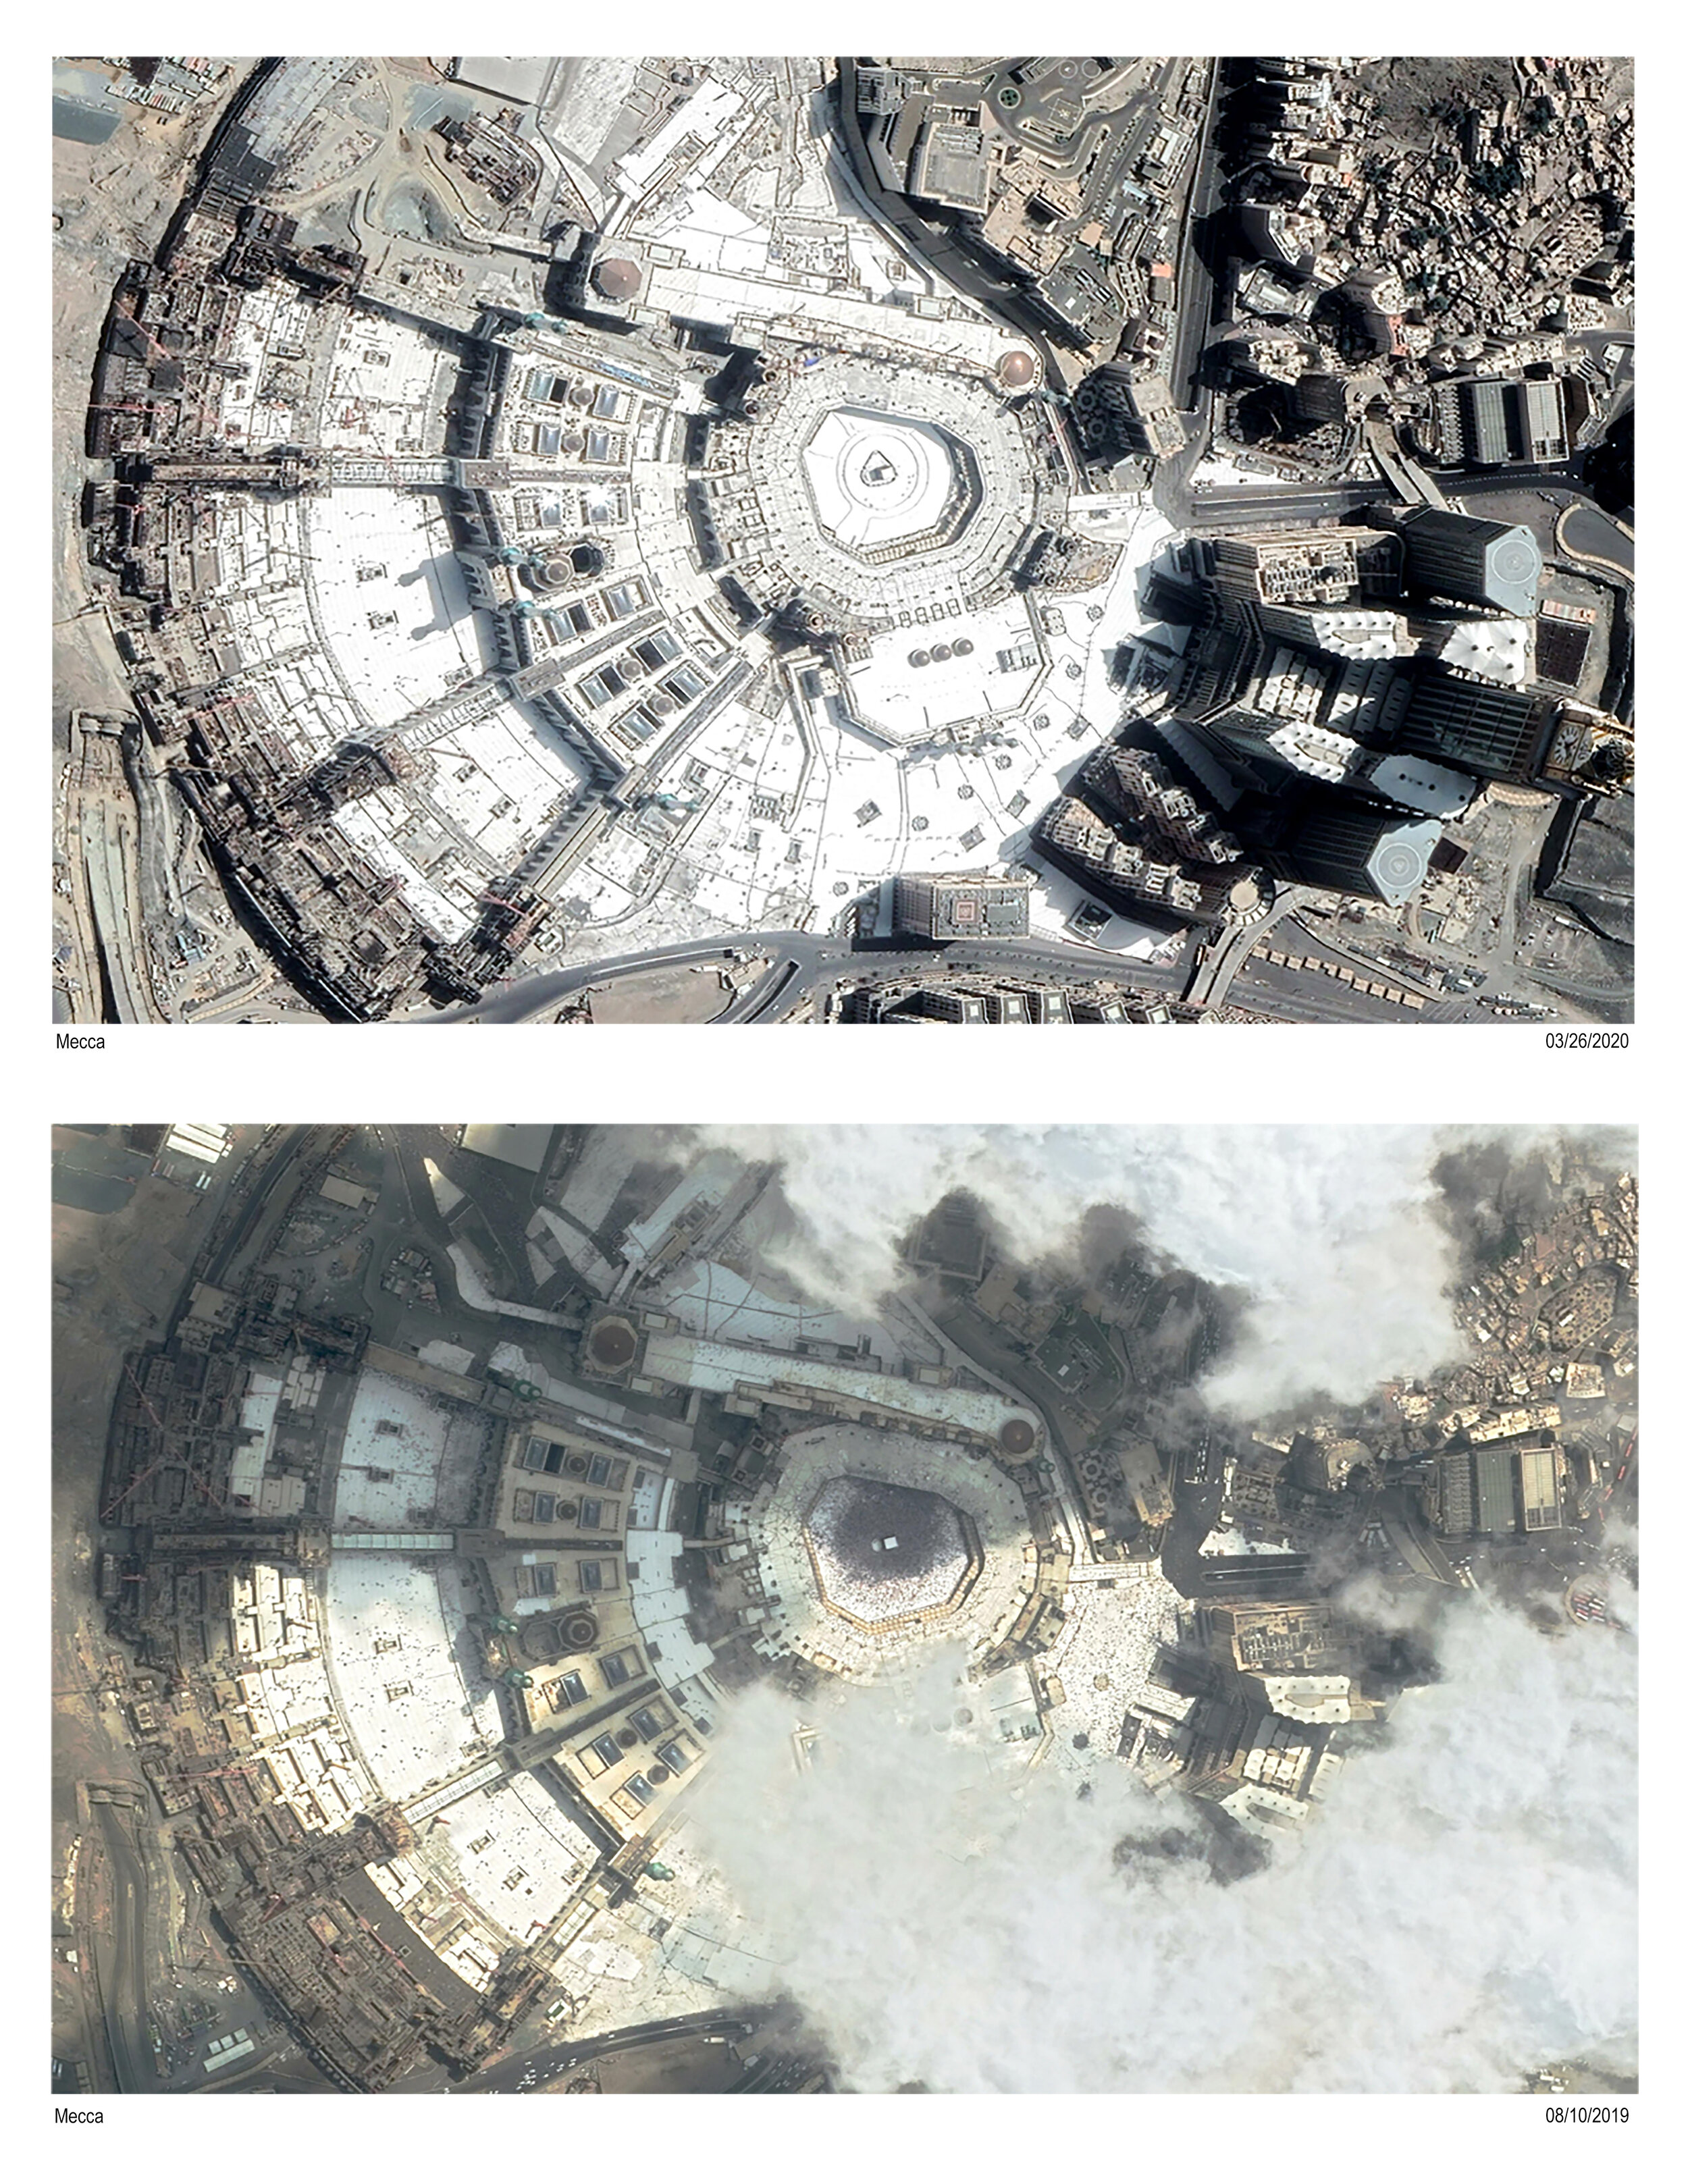  Abdullah Albohalika   Mecca,  2020  From the series: Not in Use  Google Earth Photo, Digital Inkjet Print 